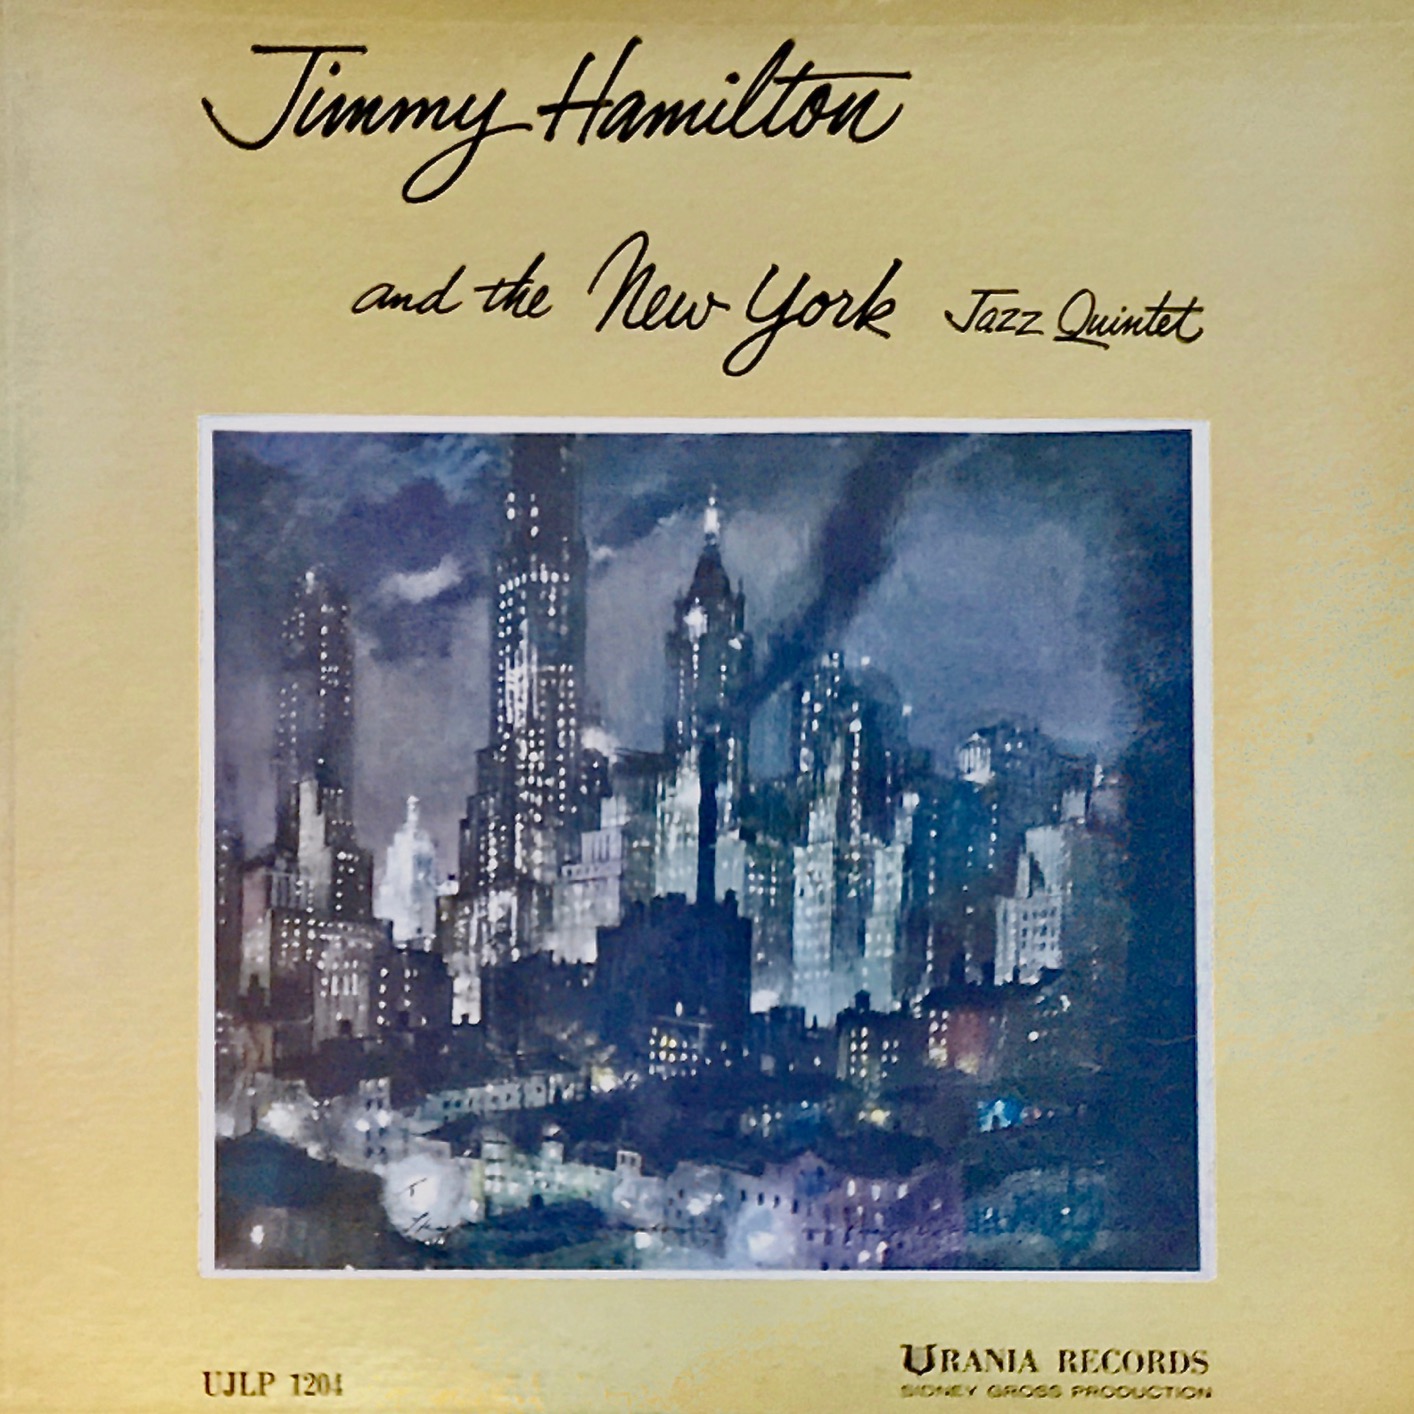 Jimmy Hamilton and the New York Jazz Quintet - Jimmy Hamilton And The New York Jazz Quintet (1956/2019) [FLAC 24bit/96kHz]